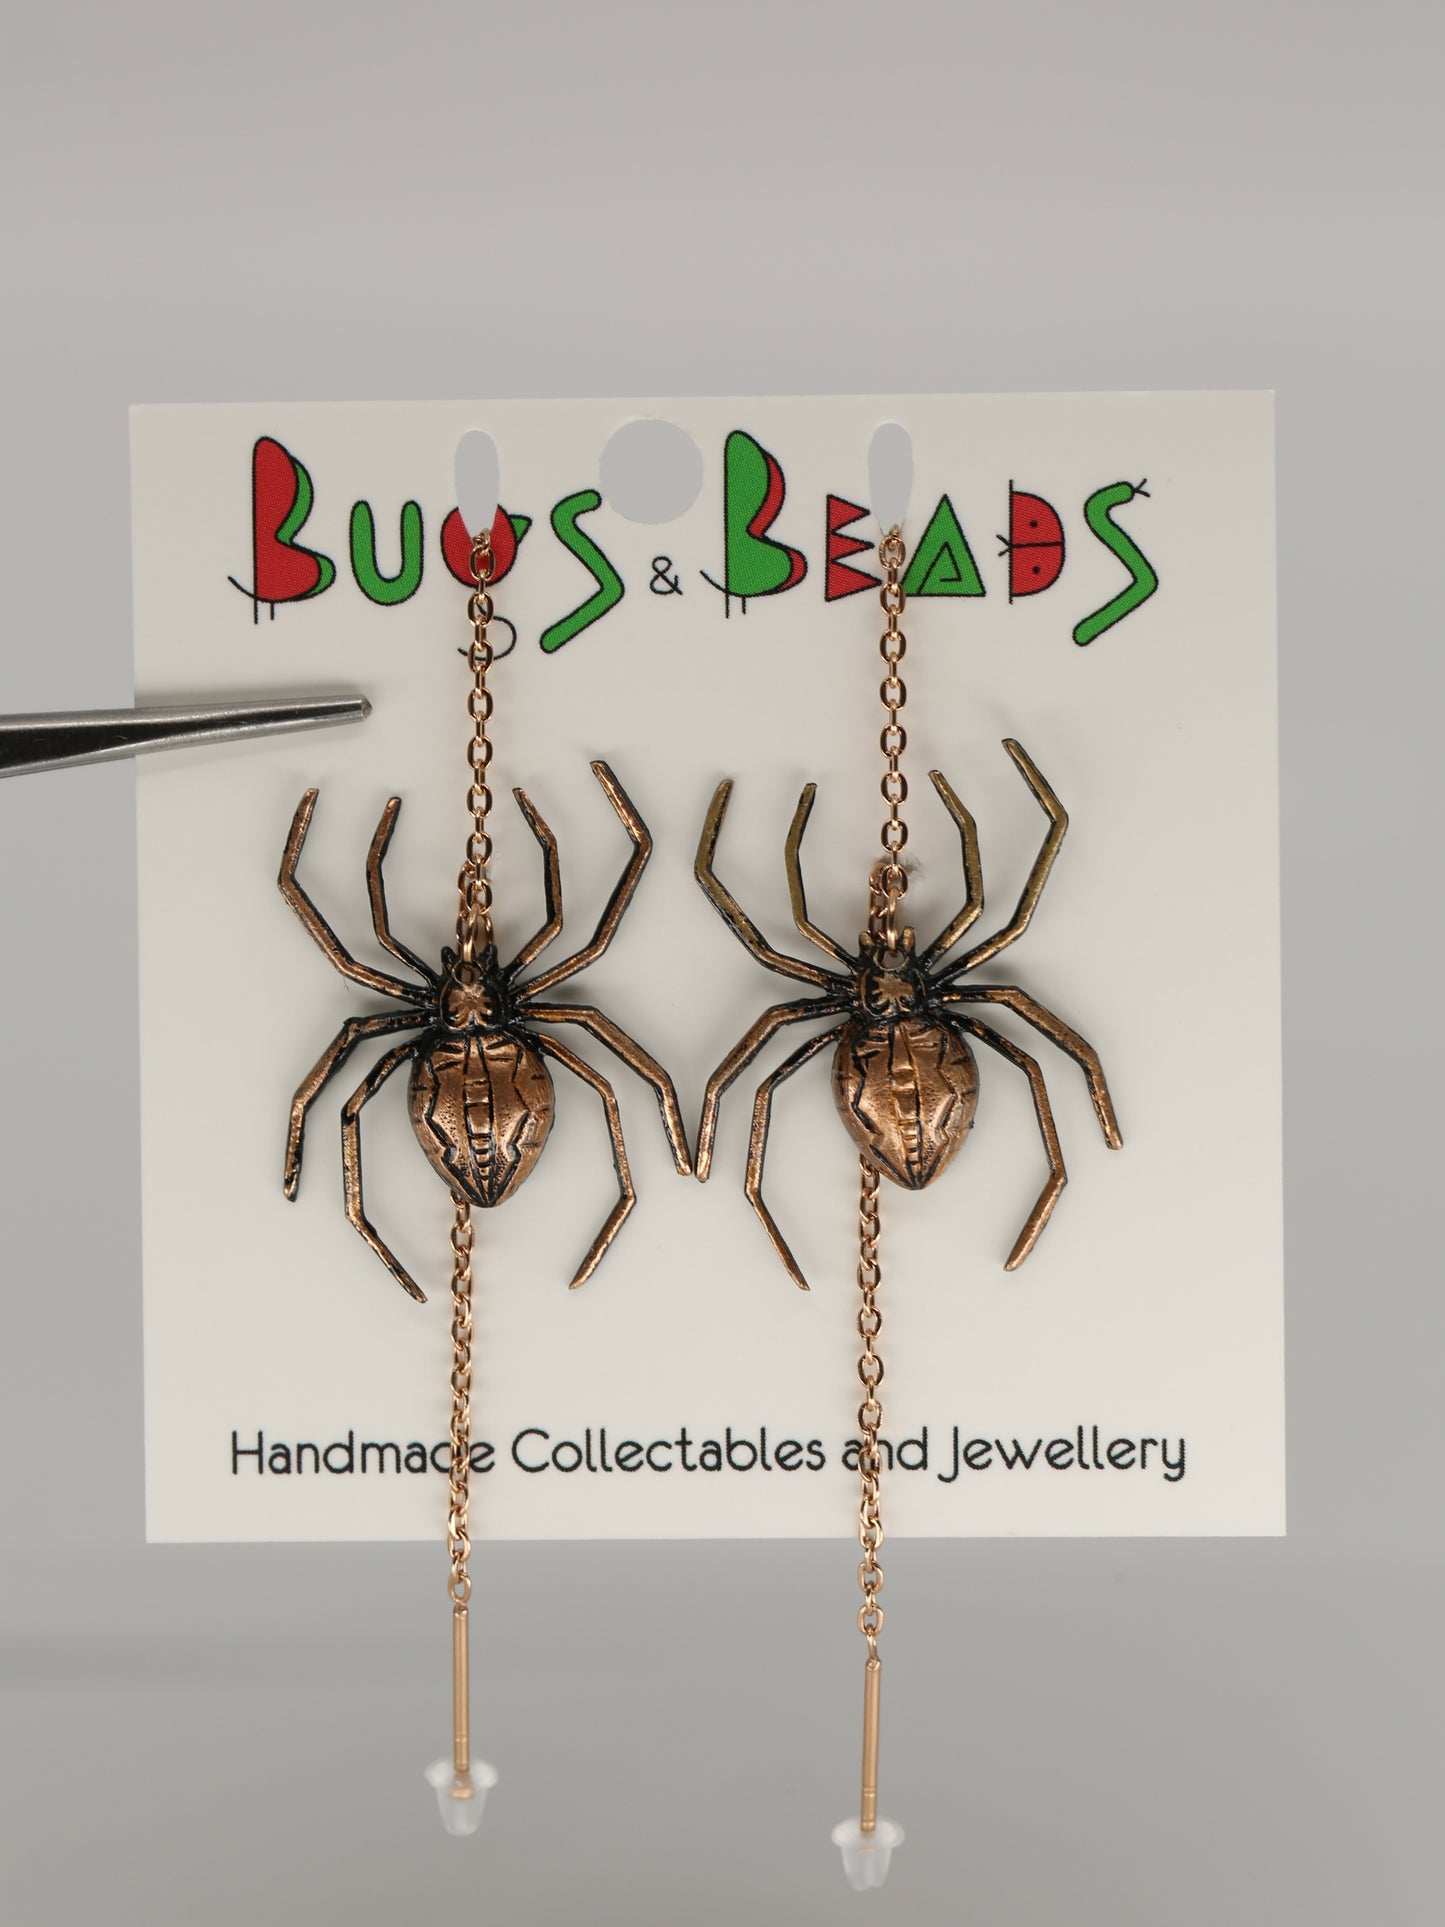 Spider earrings on a thread